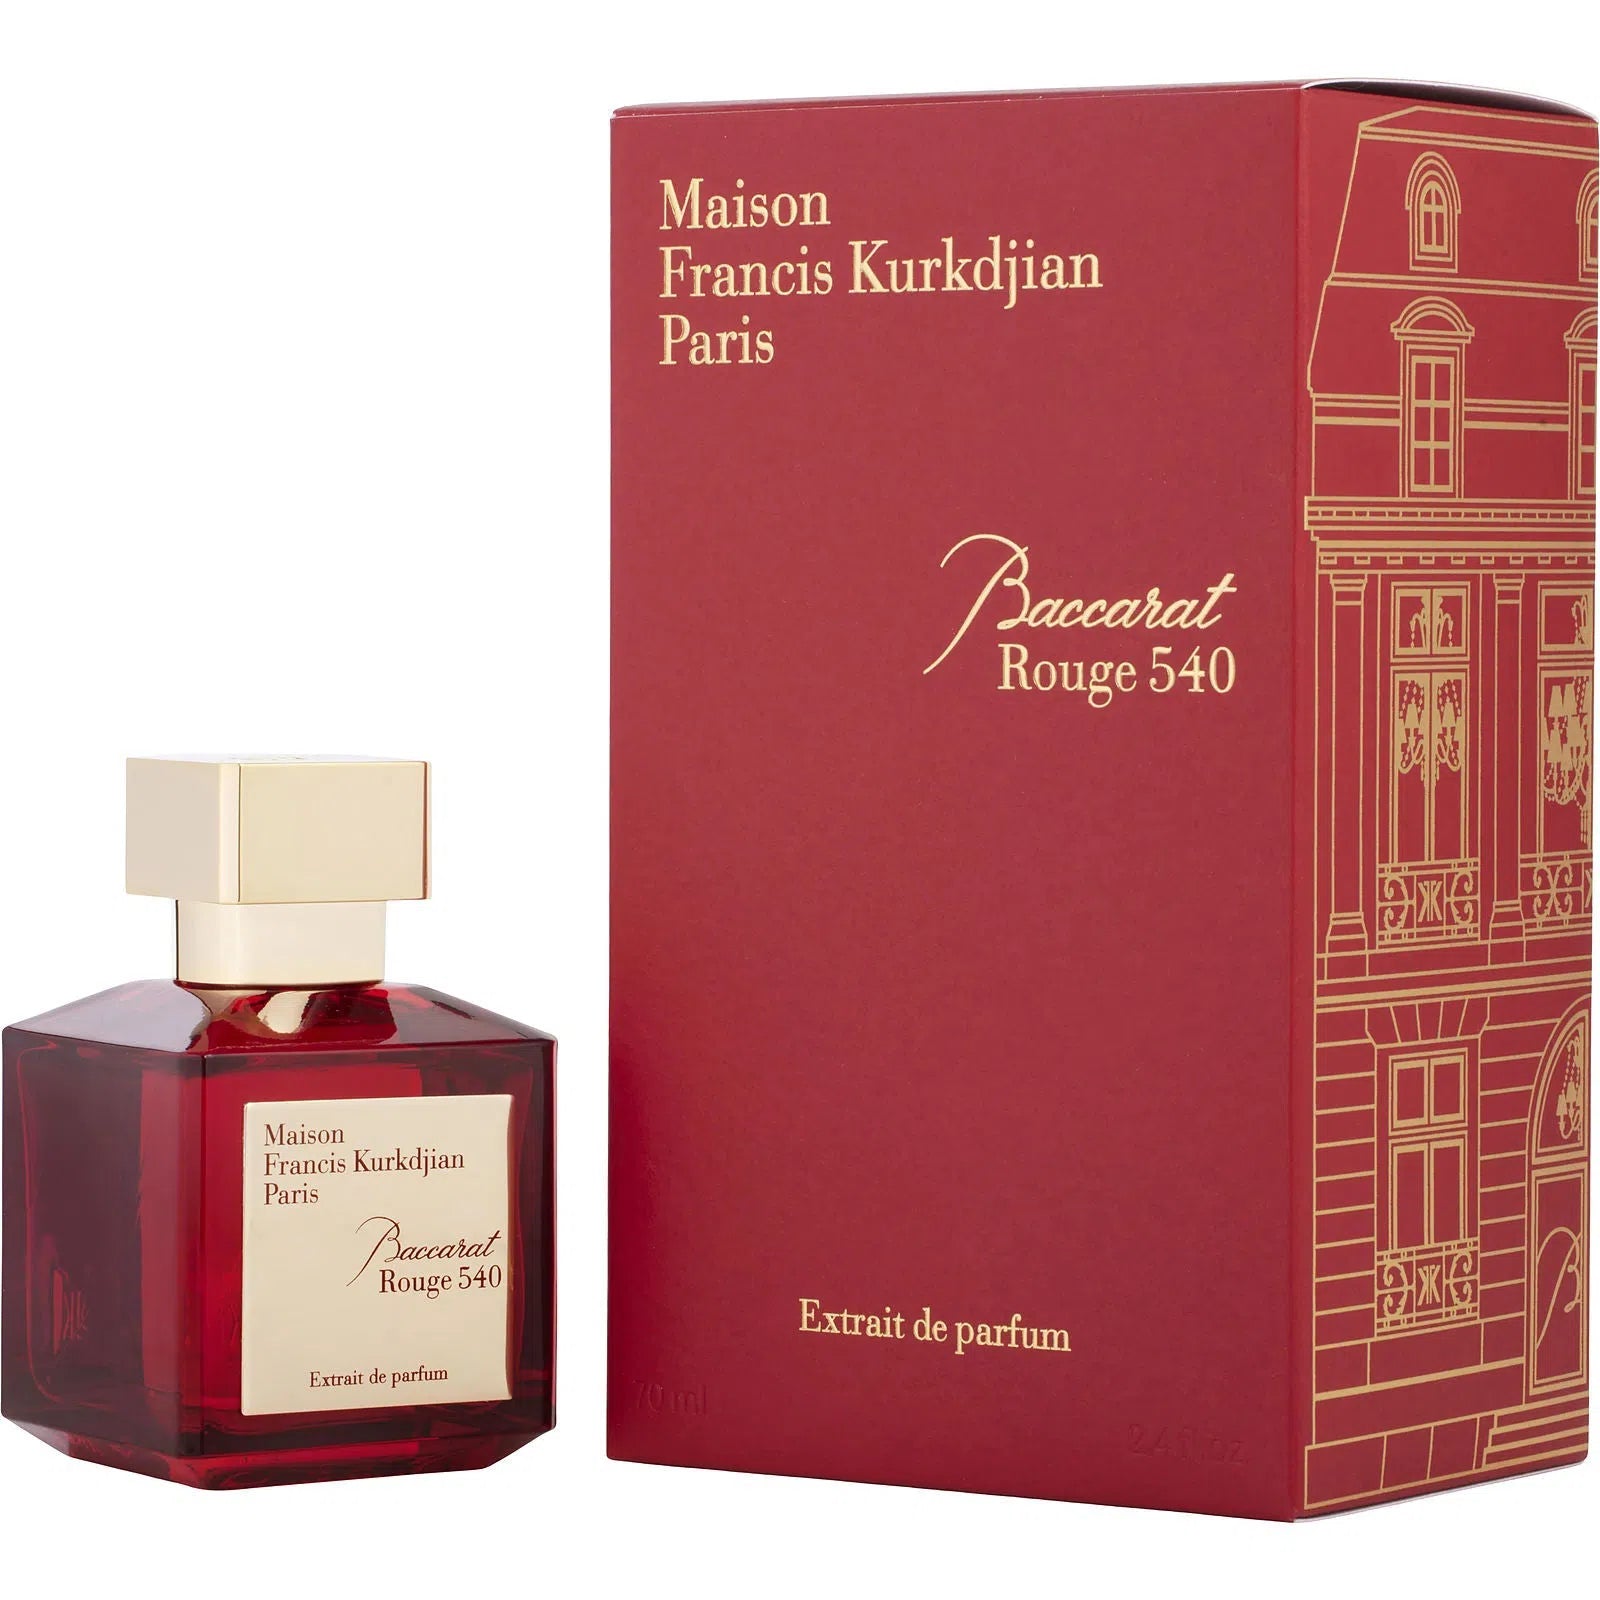 Perfume Maison Francis Kurkdjian Paris Baccarat Rouge 540 Extract Parfum (U) / 70 ml - 3700559605905- Prive Perfumes Honduras